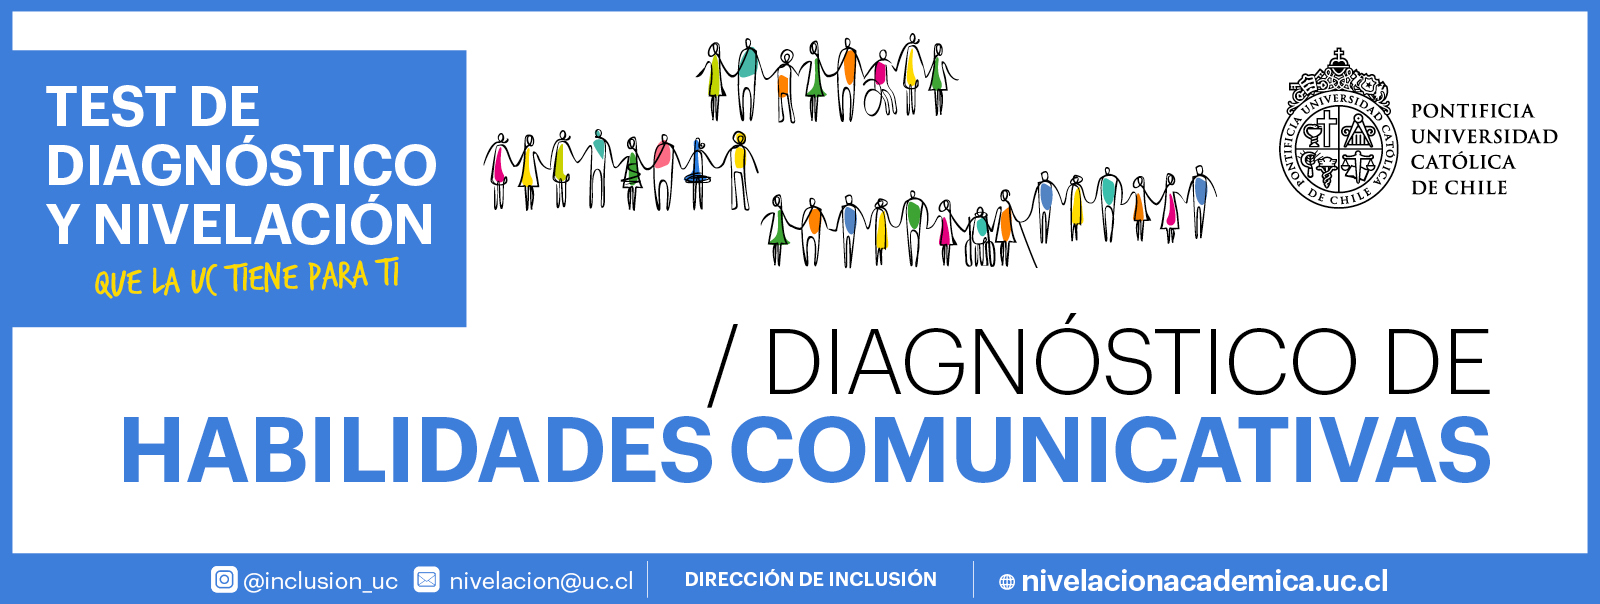 Banner gráfico con título: "Diagnóstico de Habilidades Comunicativas"